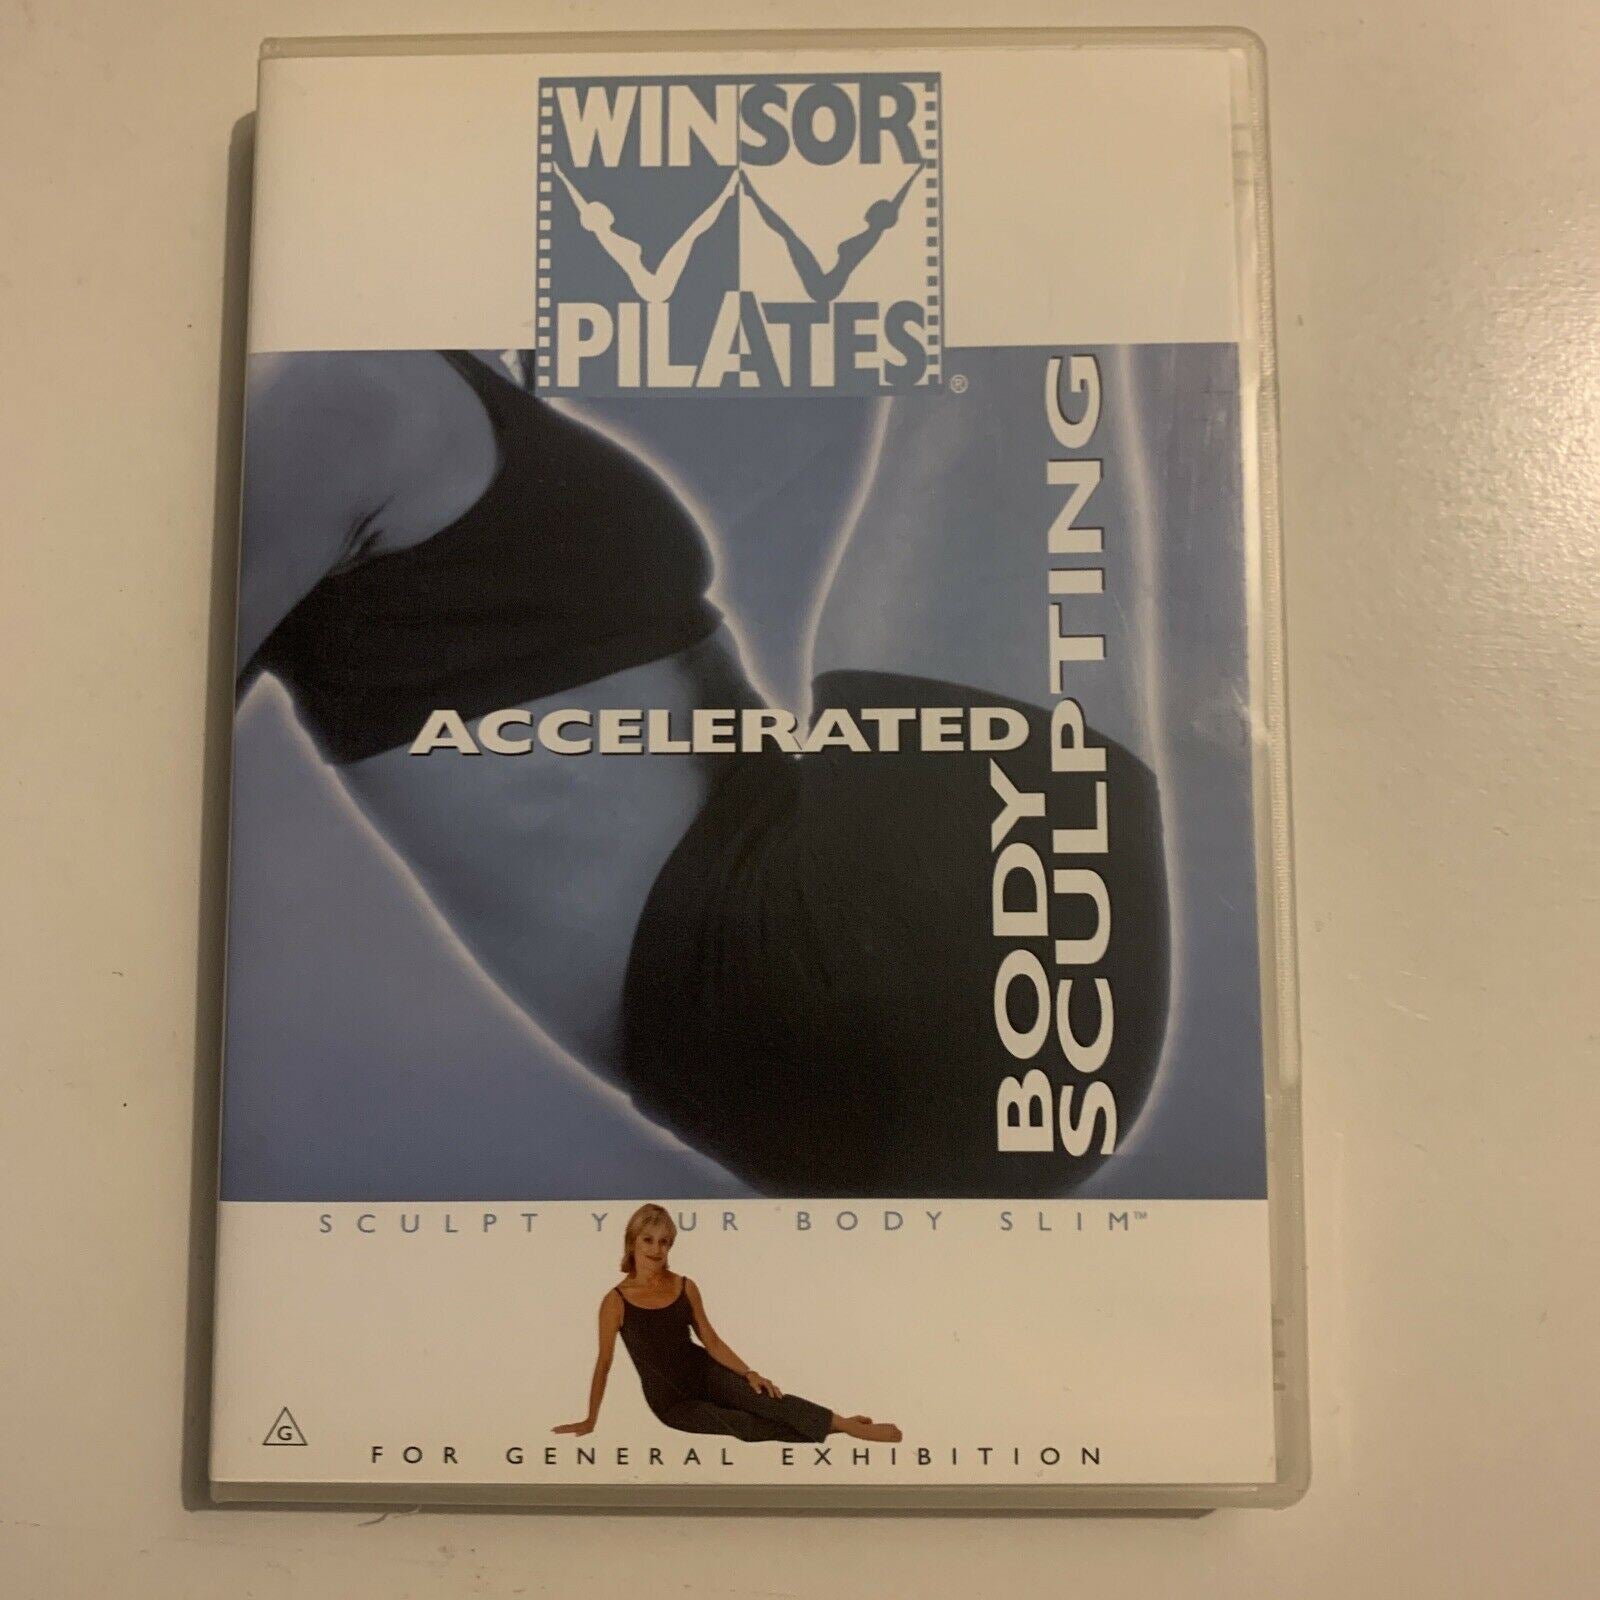 Winsor Pilates Advanced Body Slimming (Sculpt Your Body Slim) (DVD)